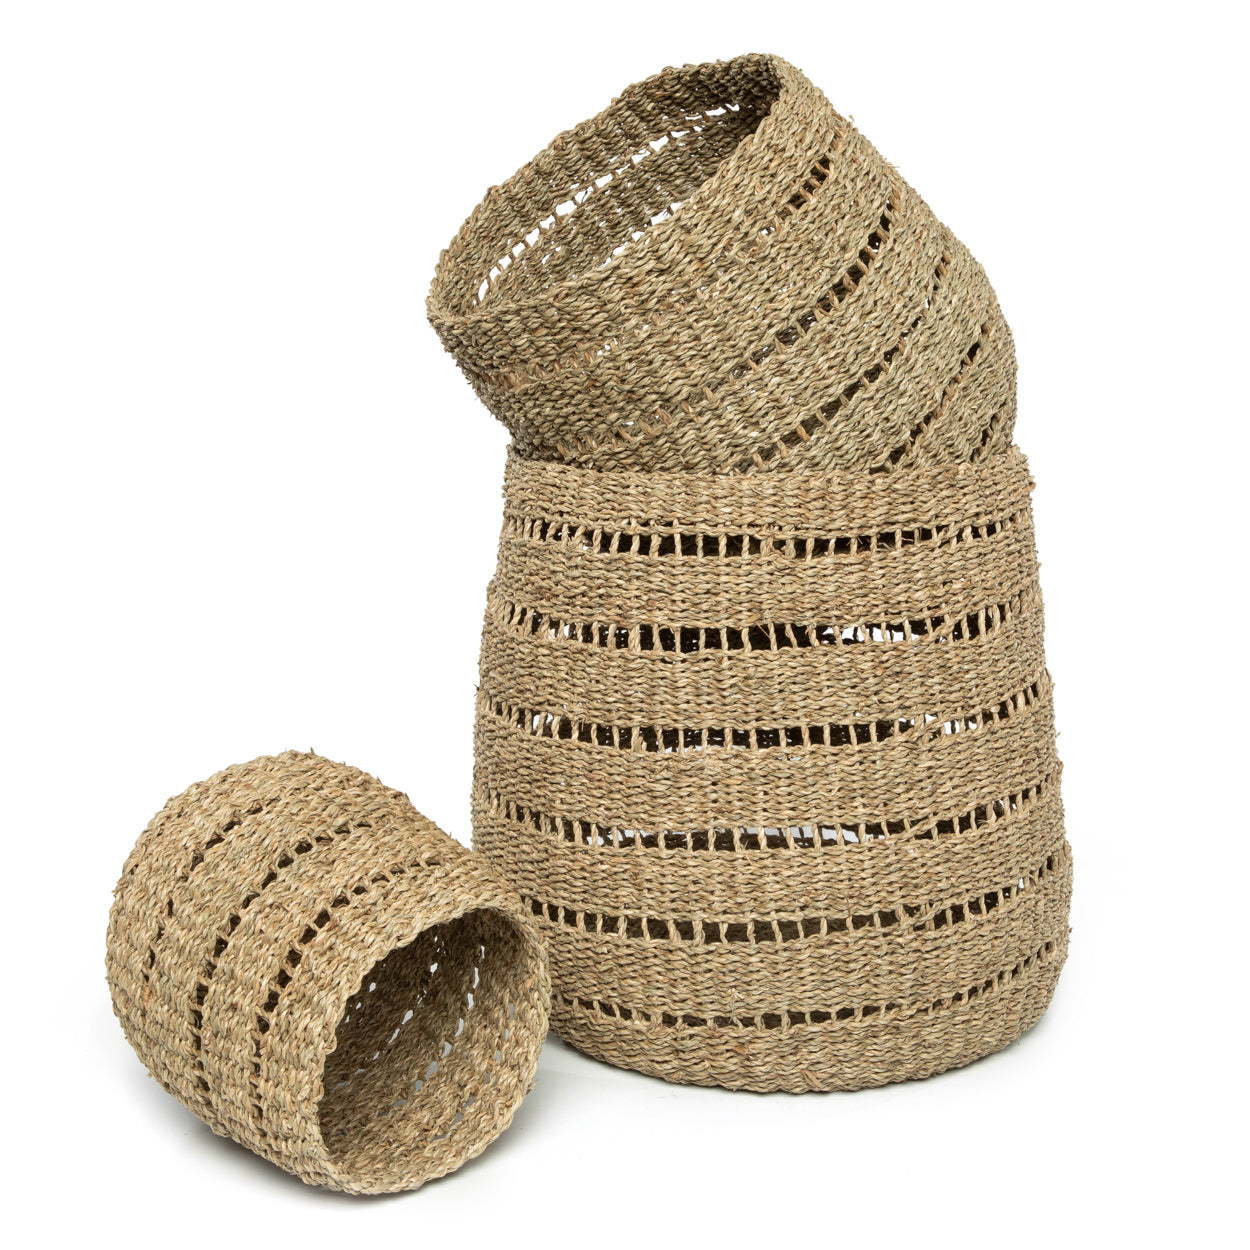 THE NINH BINH Baskets Set of 3 half-folded